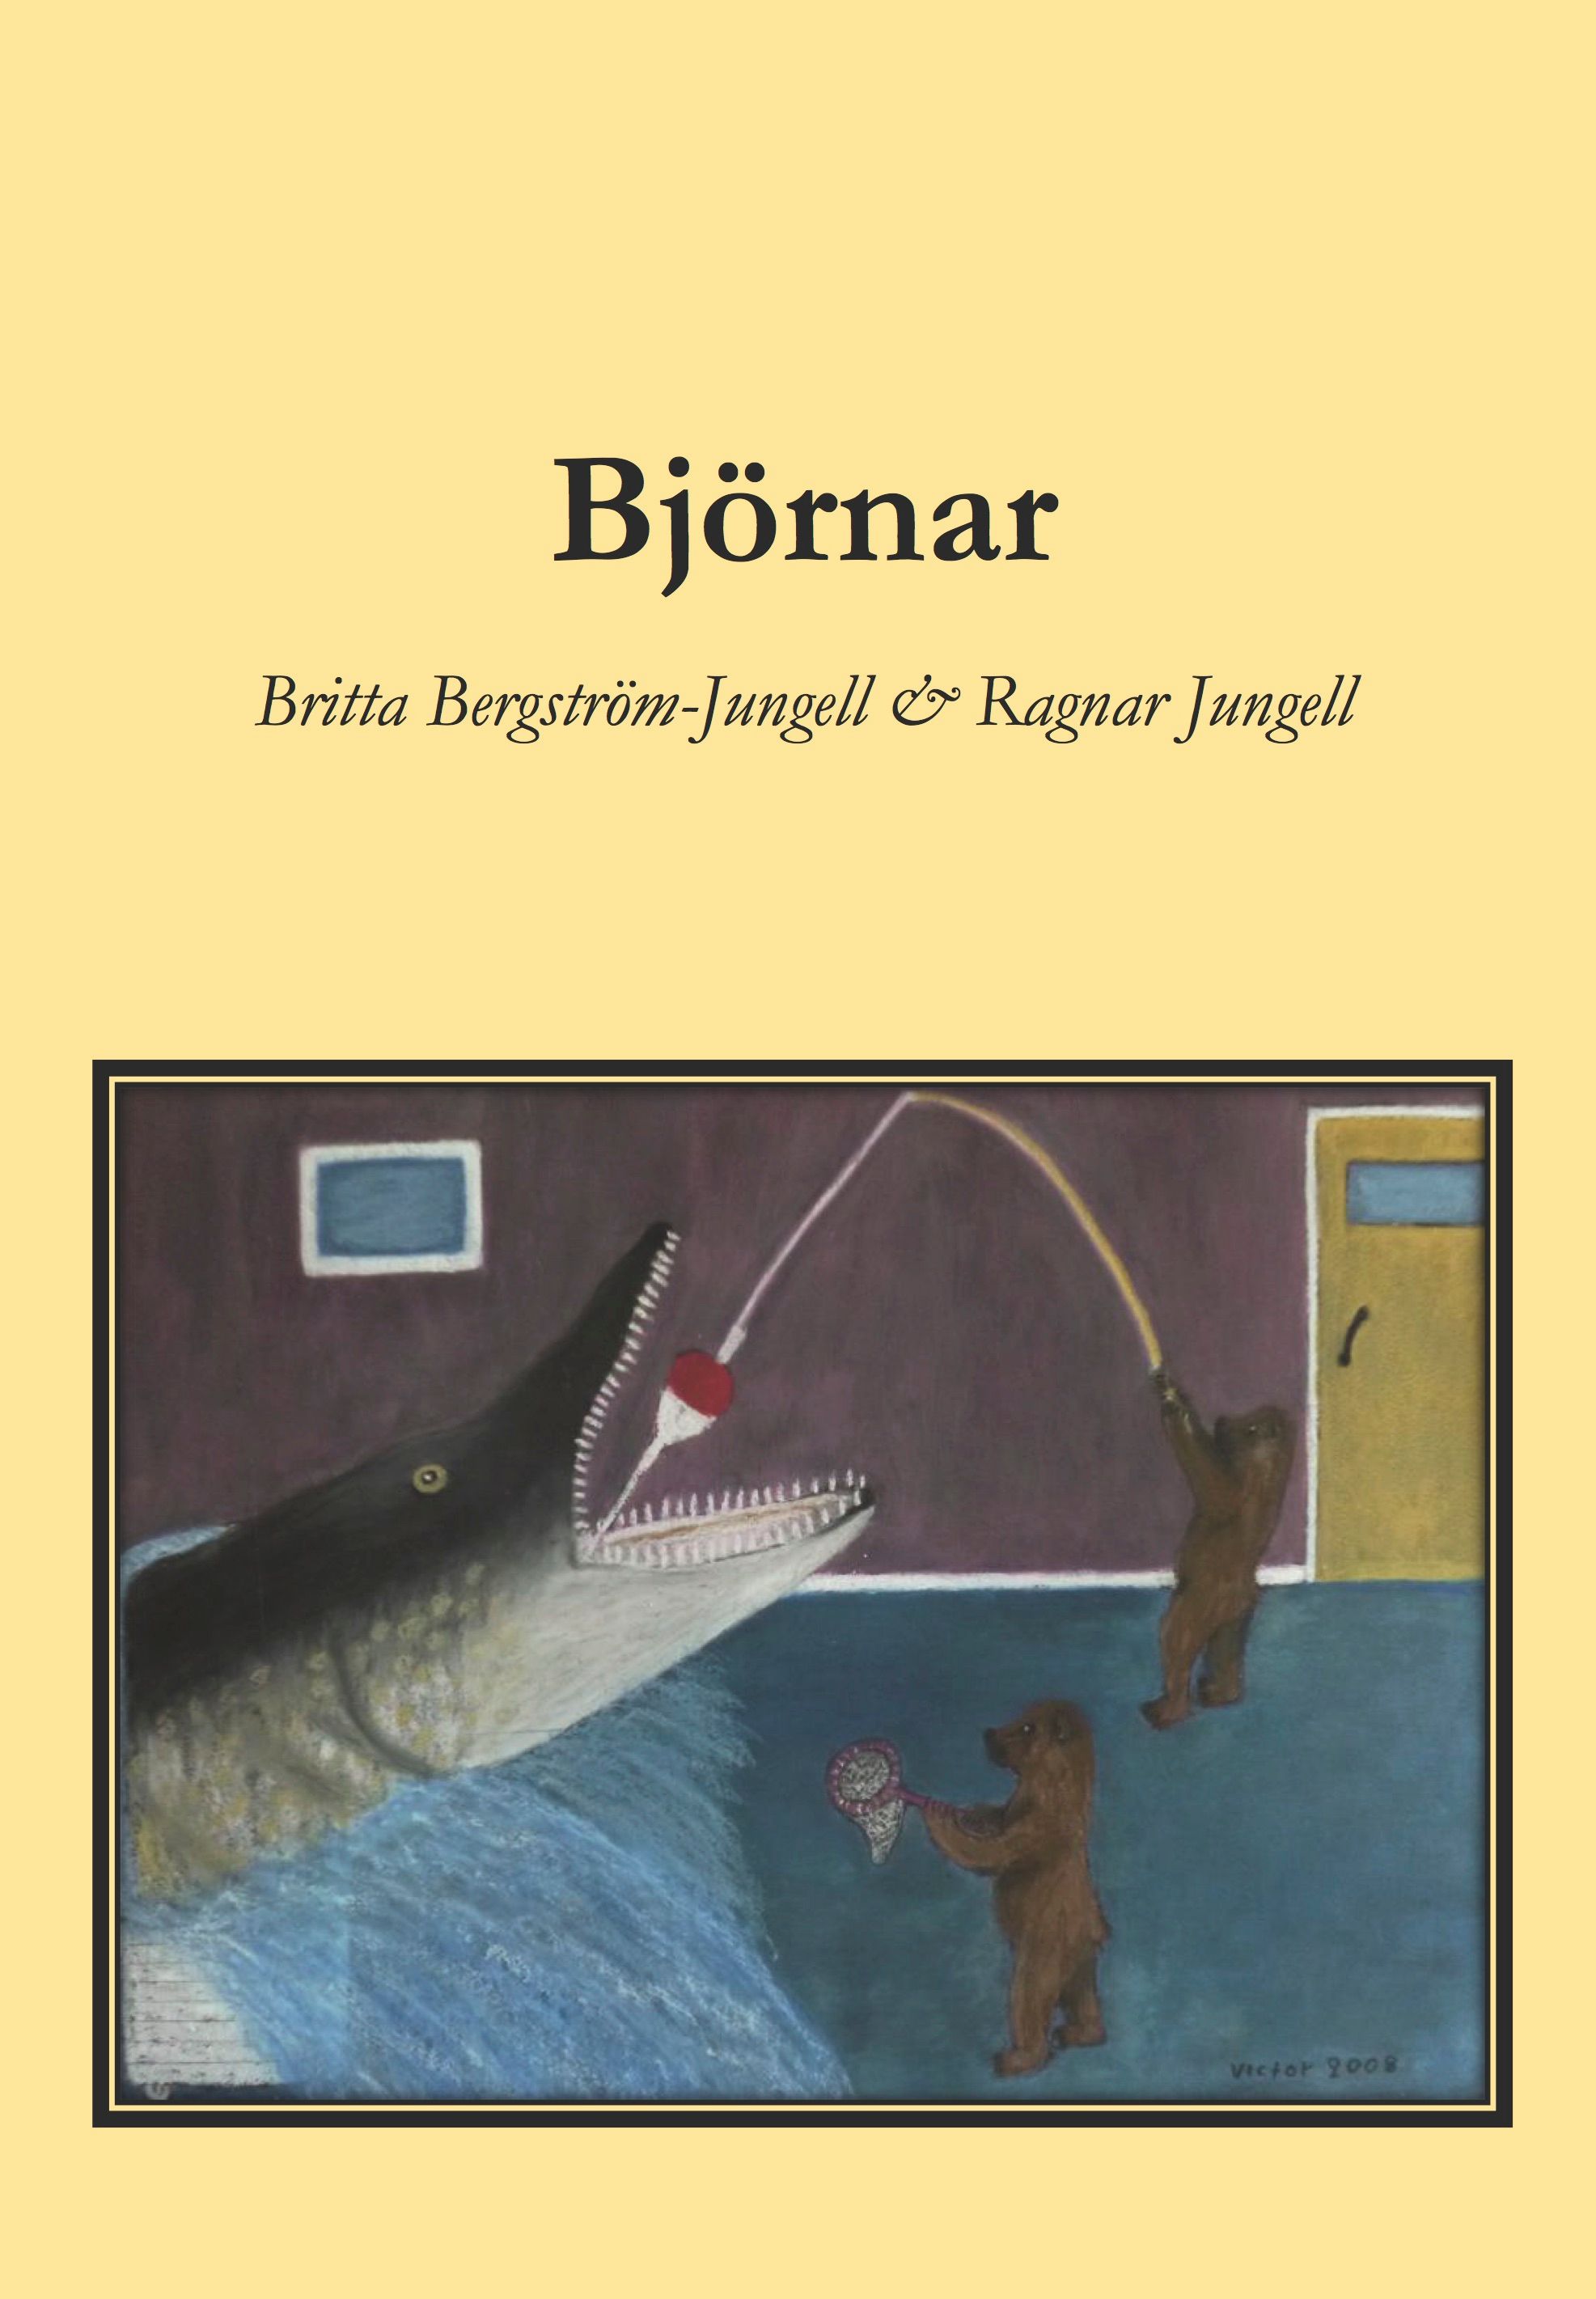 Björnar, e-bok av Britta Bergström-Jungell, Ragnar Jungell